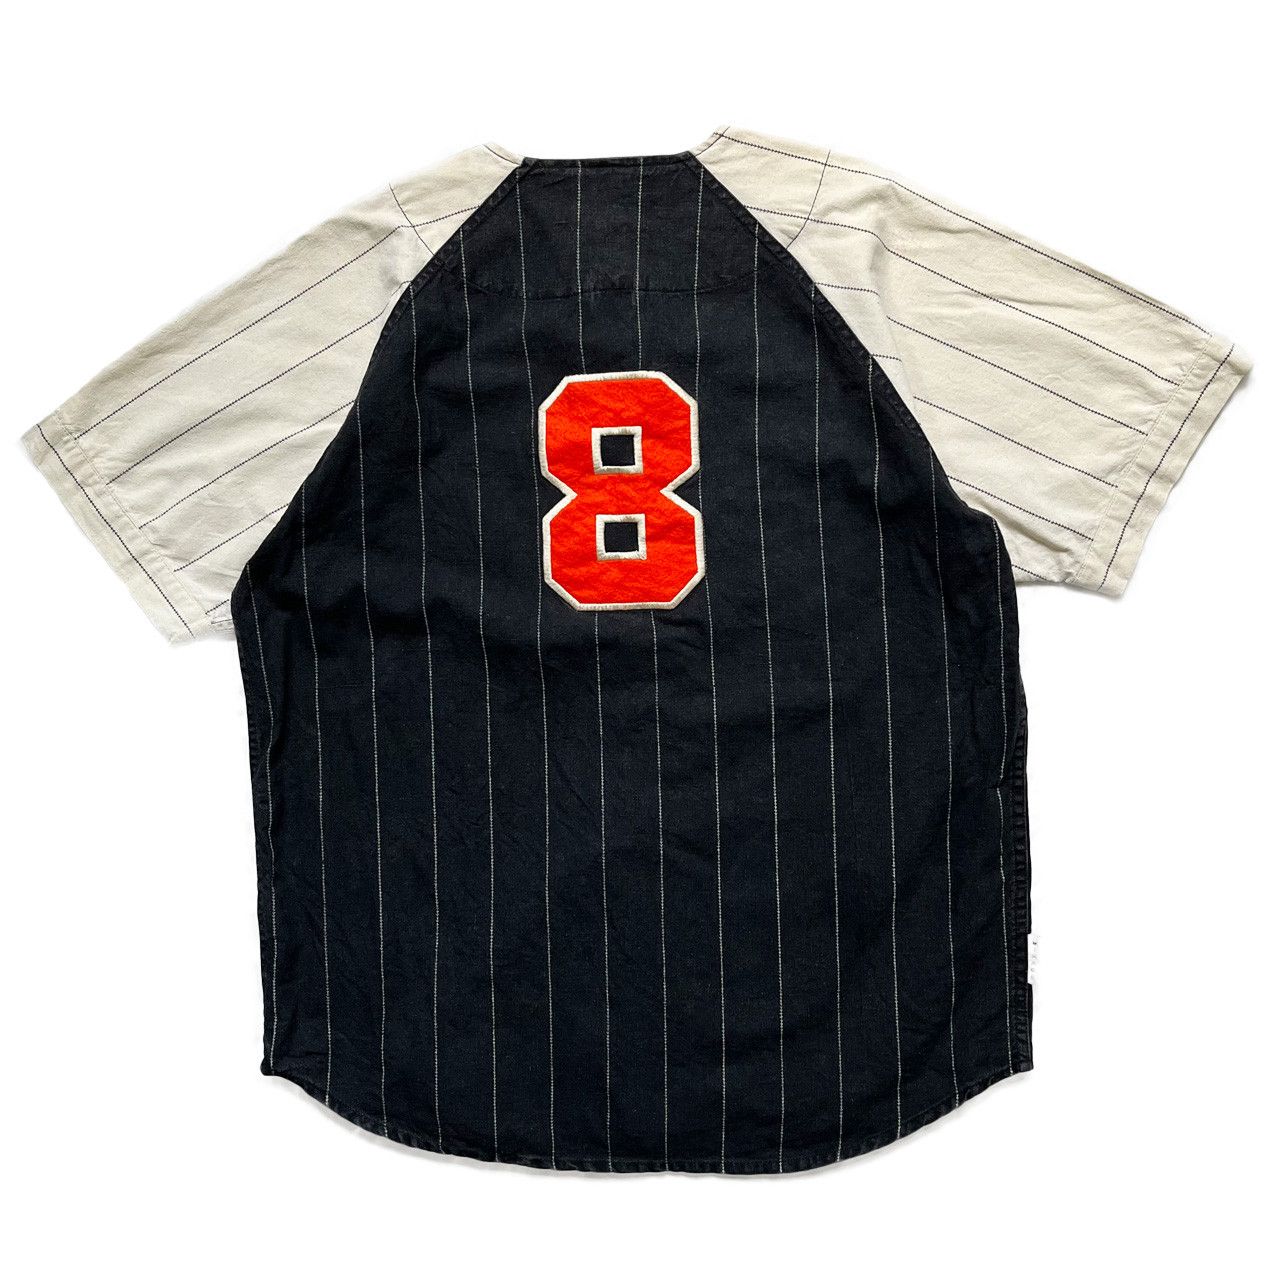 Cal Ripken Jr Caricature Baltimore Orioles 90s Vintage shirt